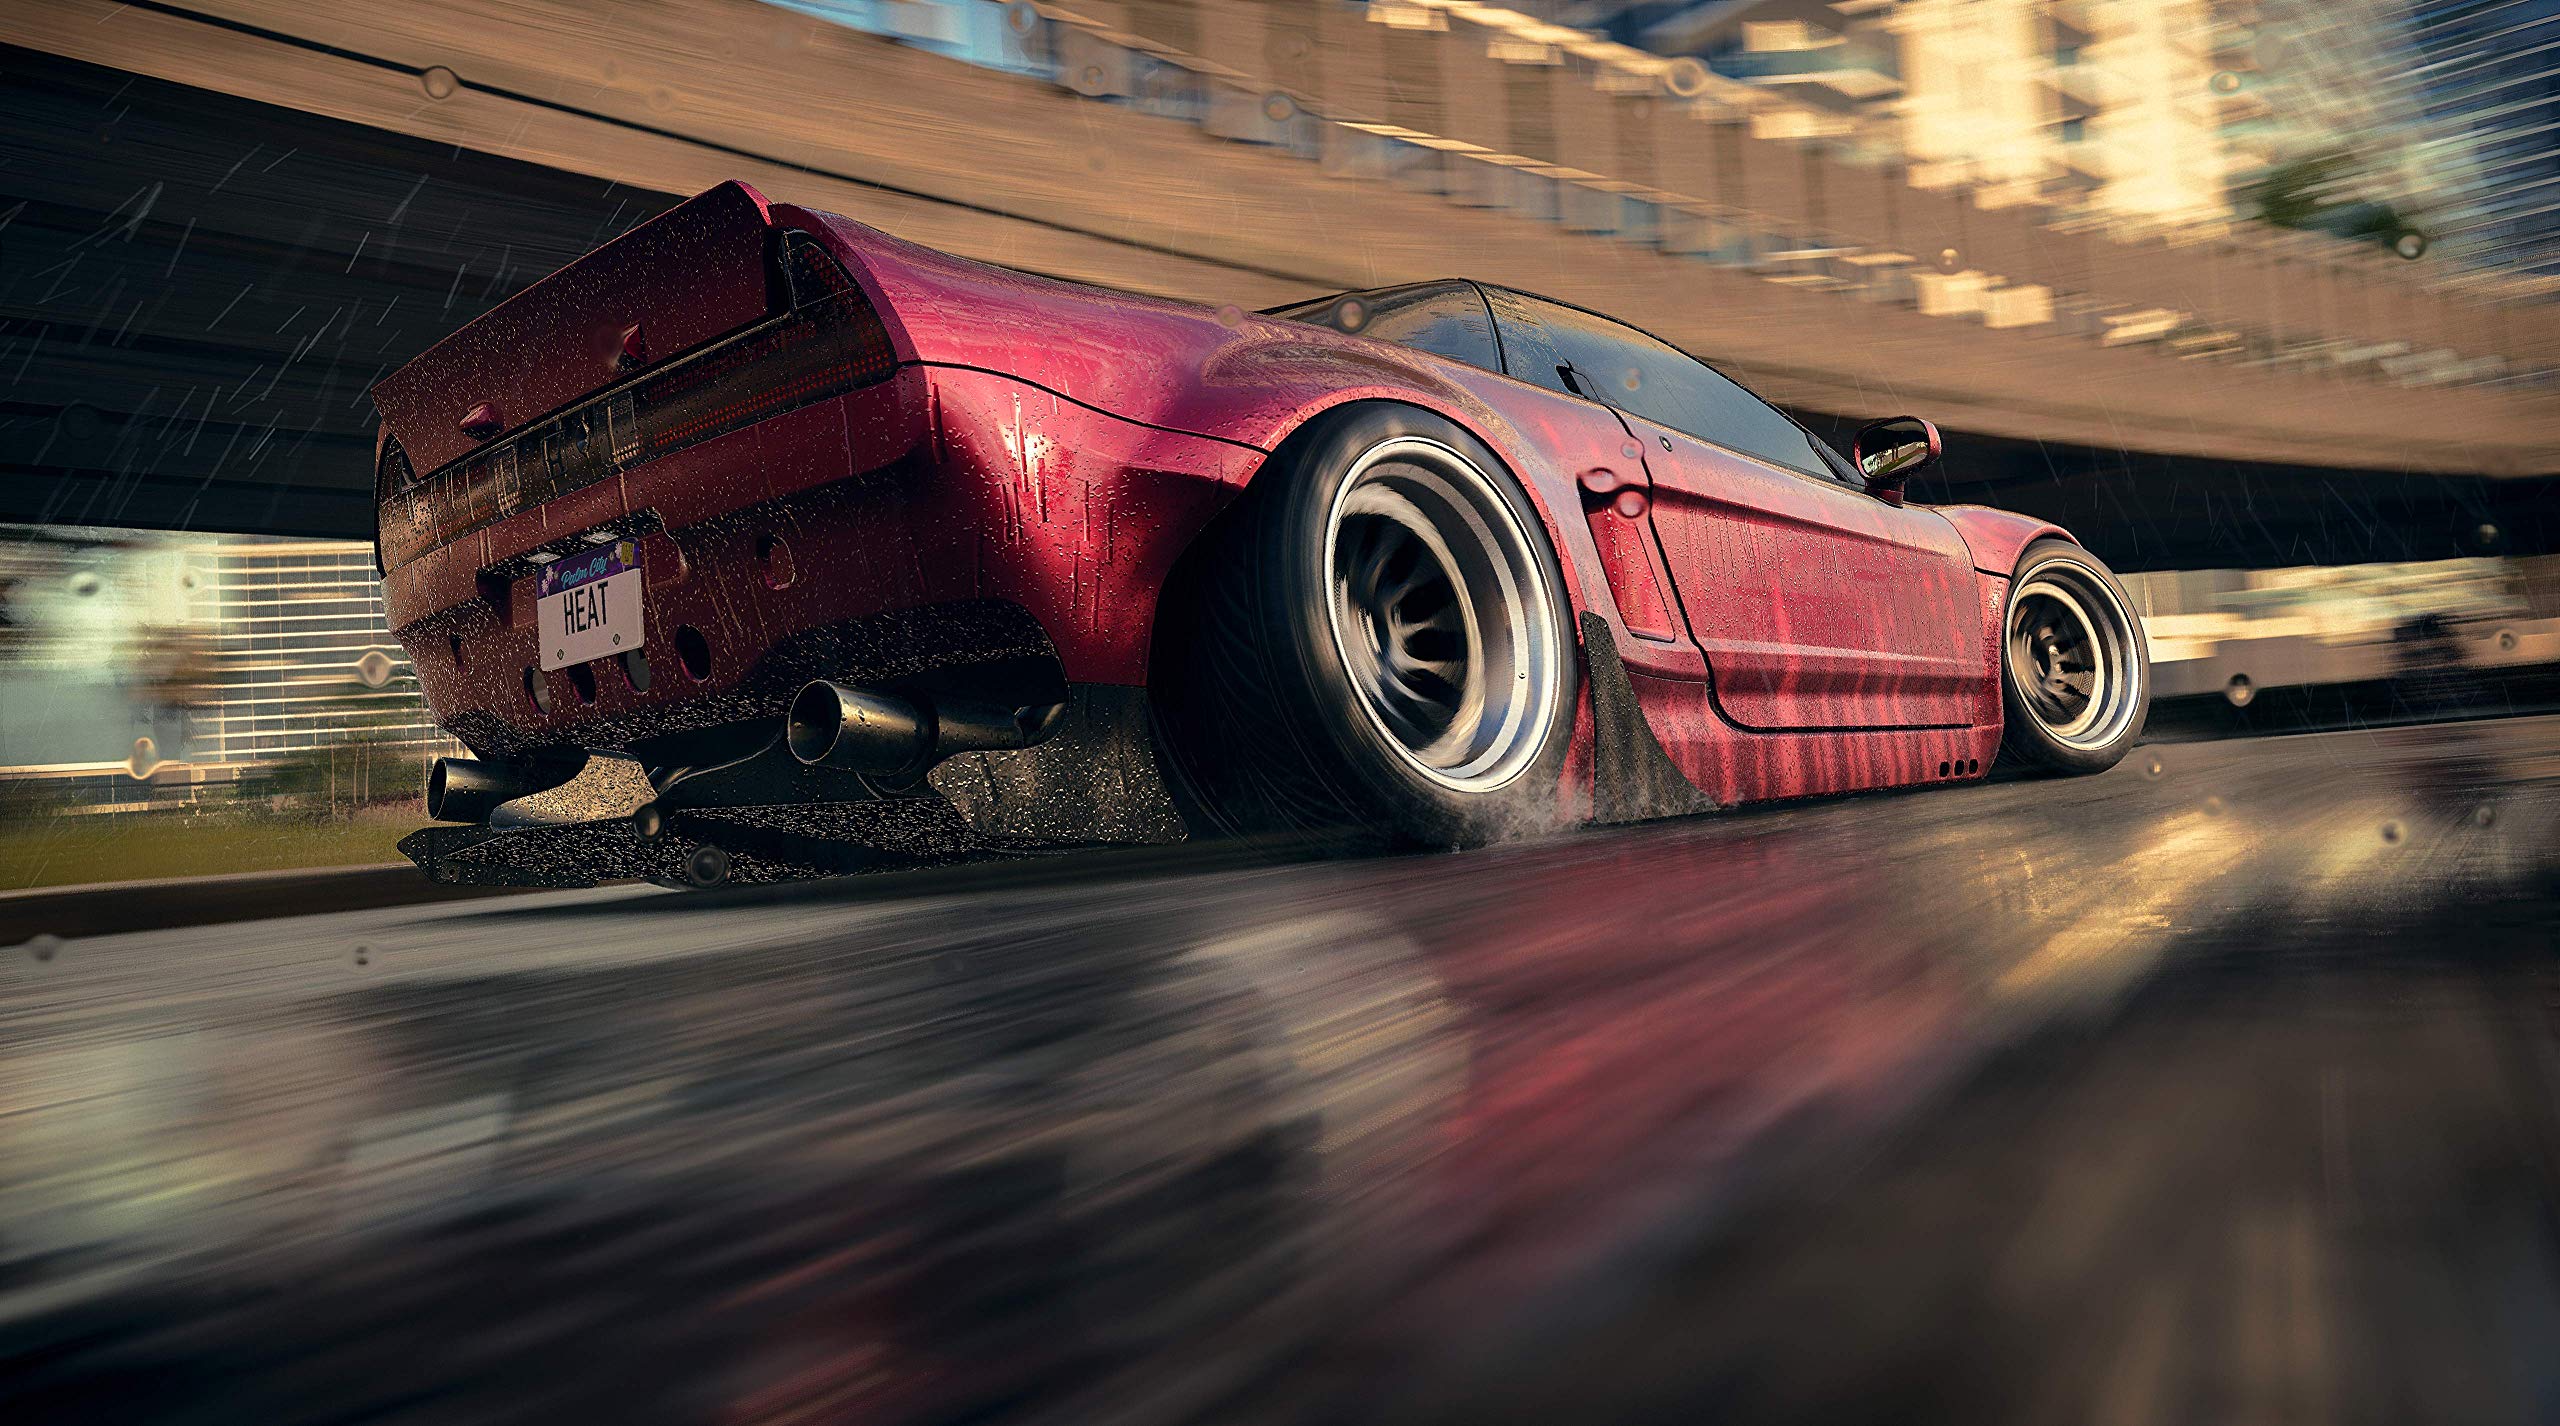 Need for Speed Heat - Origin PC [Online Game Code]